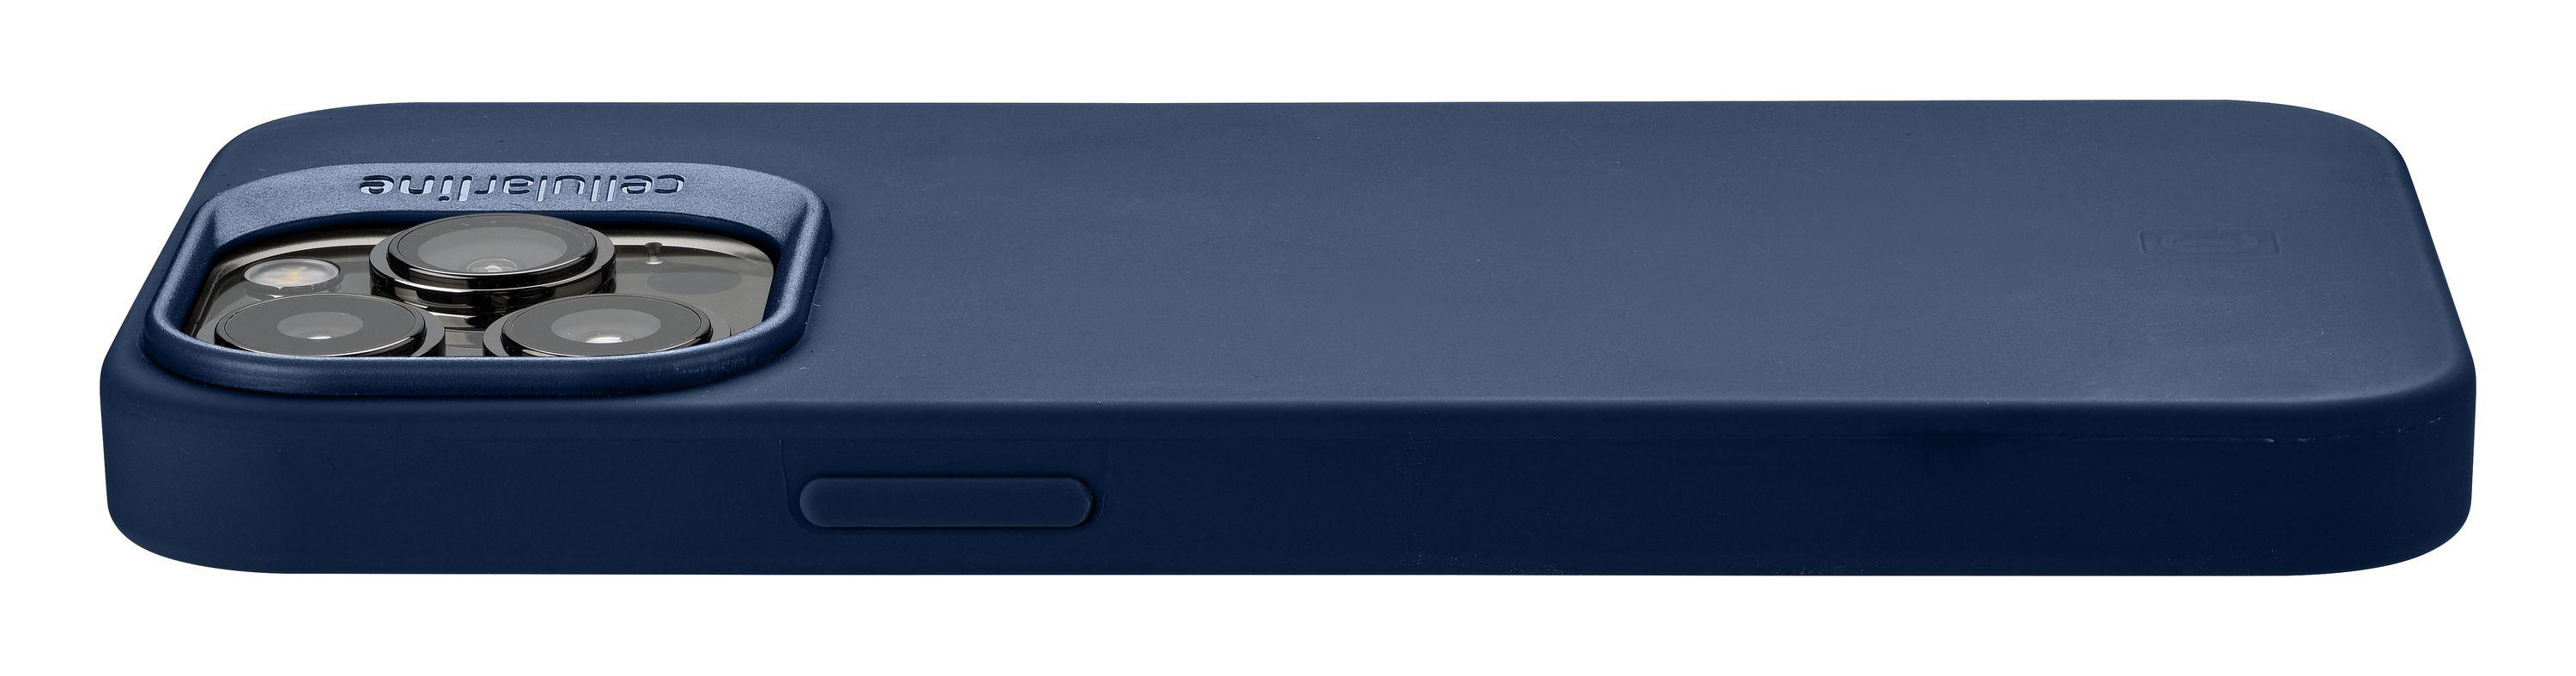 Backcover, LINE MAX, CELLULAR 14 Blue PRO Apple, Sensation, iPhone